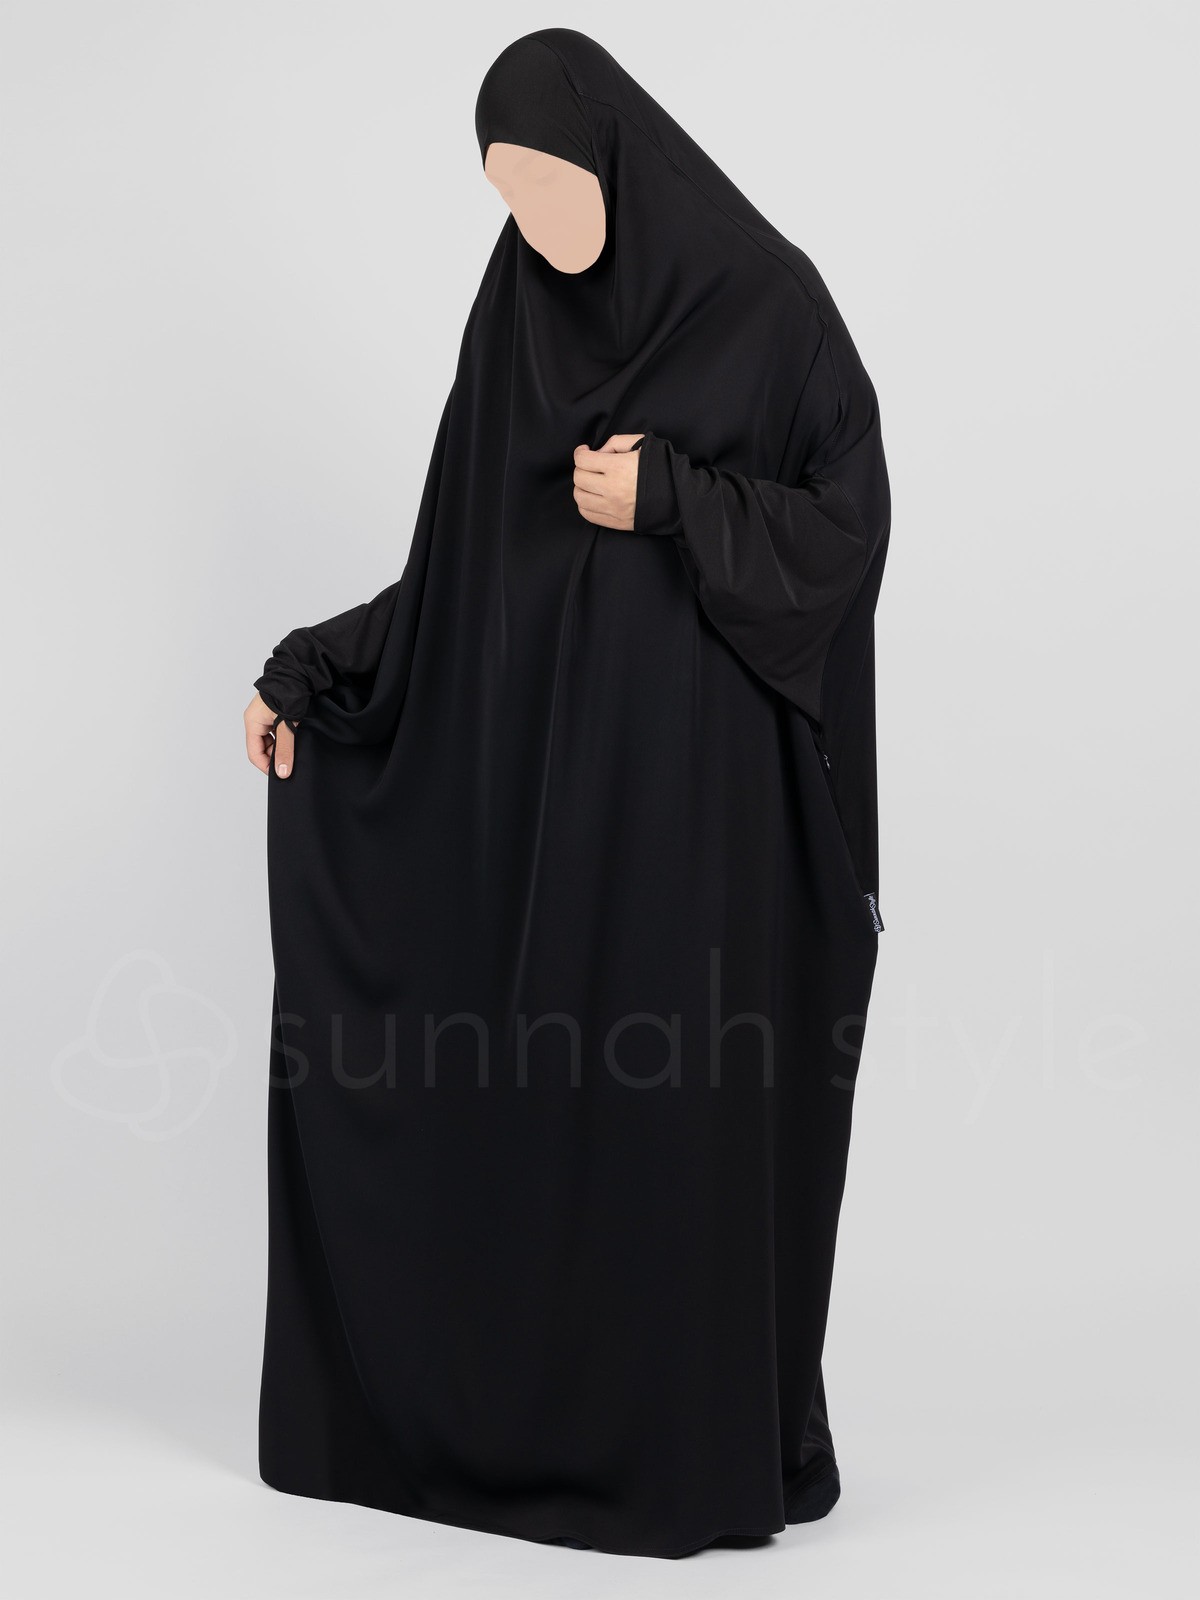 FACTORY SECONDS: Signature Full Length Jilbab (Black) - Size 64